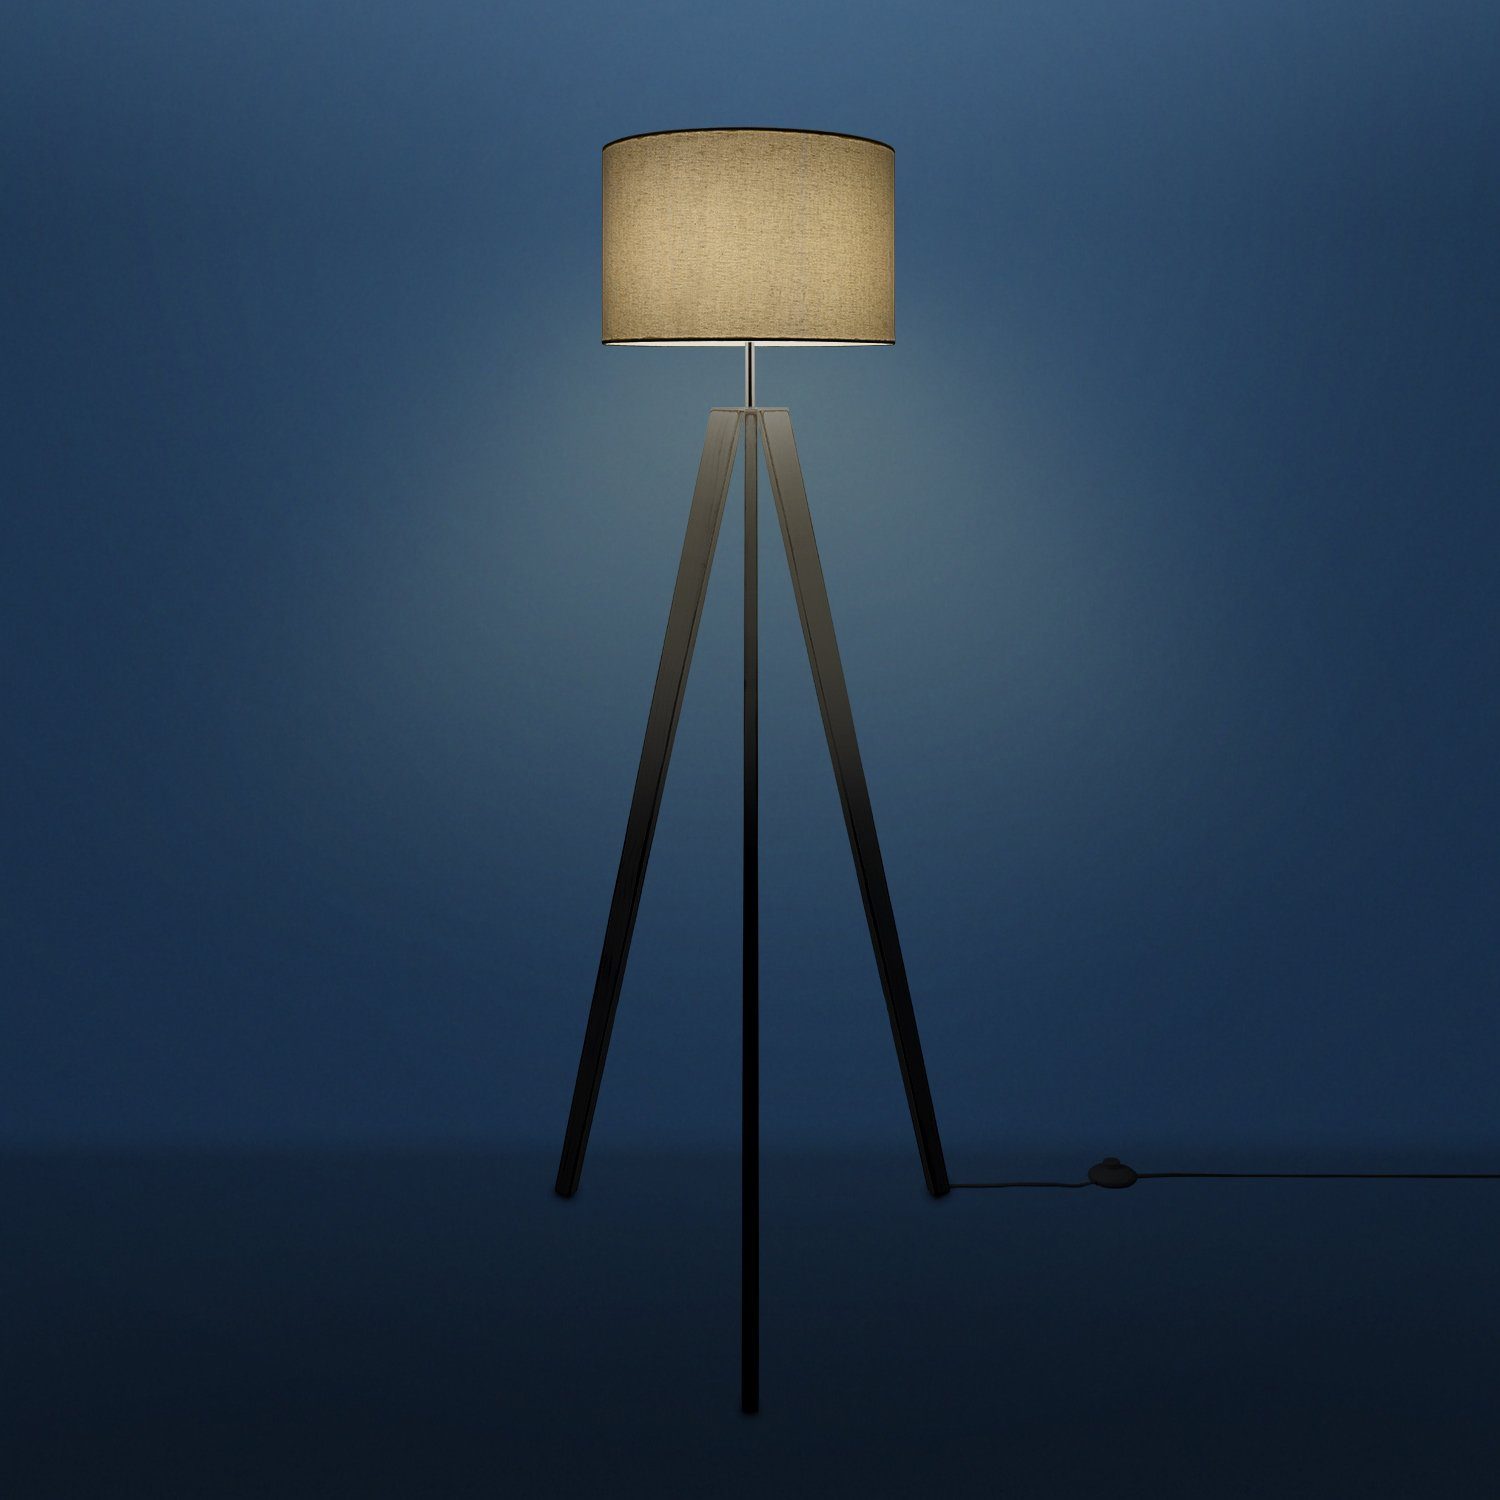 Lampe ohne uni Color, Home LED Vintage Wohnzimmer Stehlampe Canvas Skandinavischer Paco Stil E27 Stehlampe Leuchtmittel, Fuß